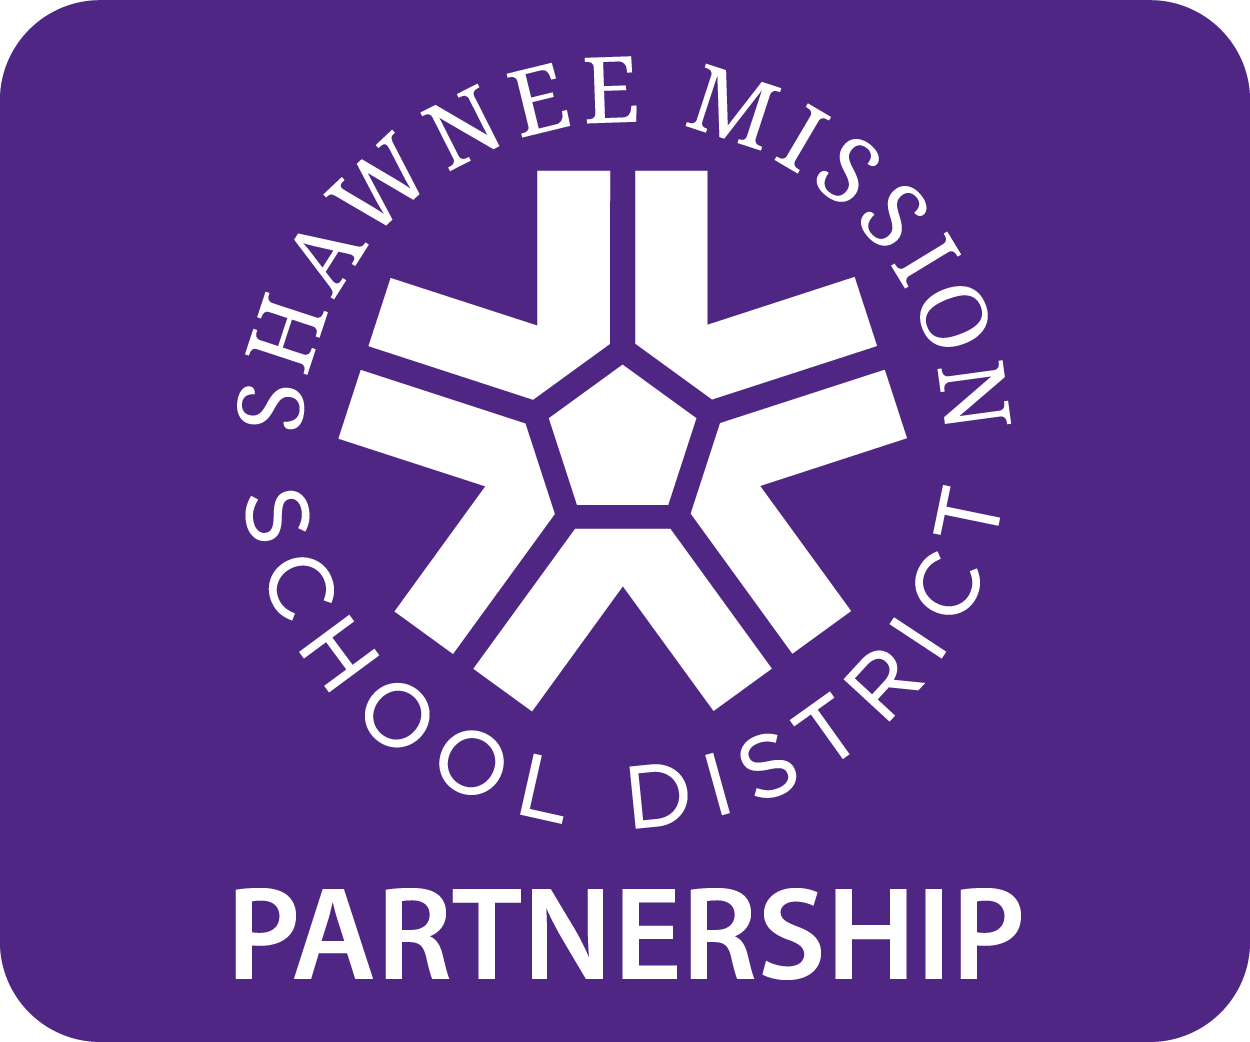 Shawnee Mission School District partnership button